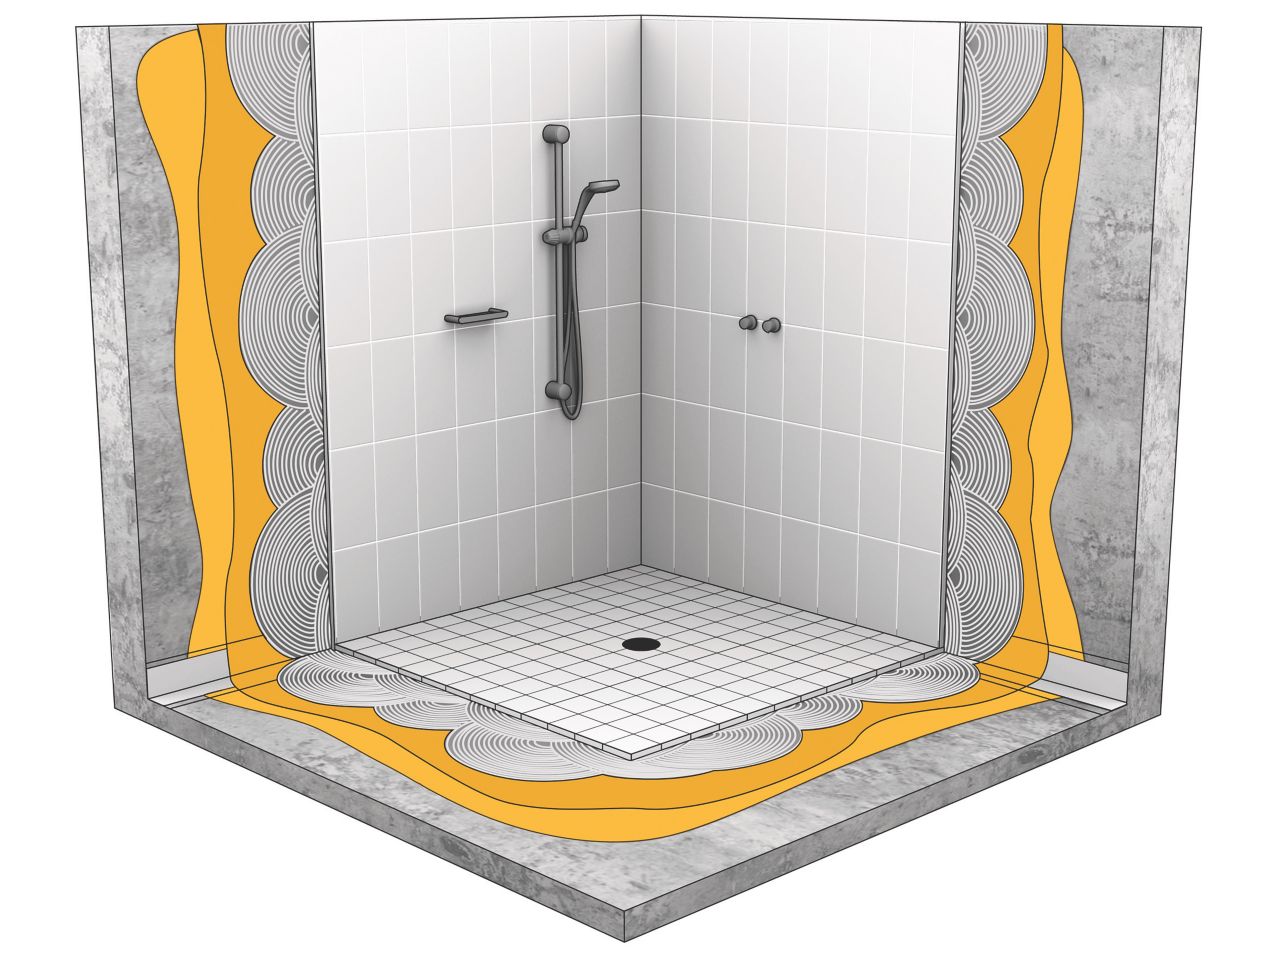 Illustration of waterproofing mortar under tiled wall and floor in shower wet room